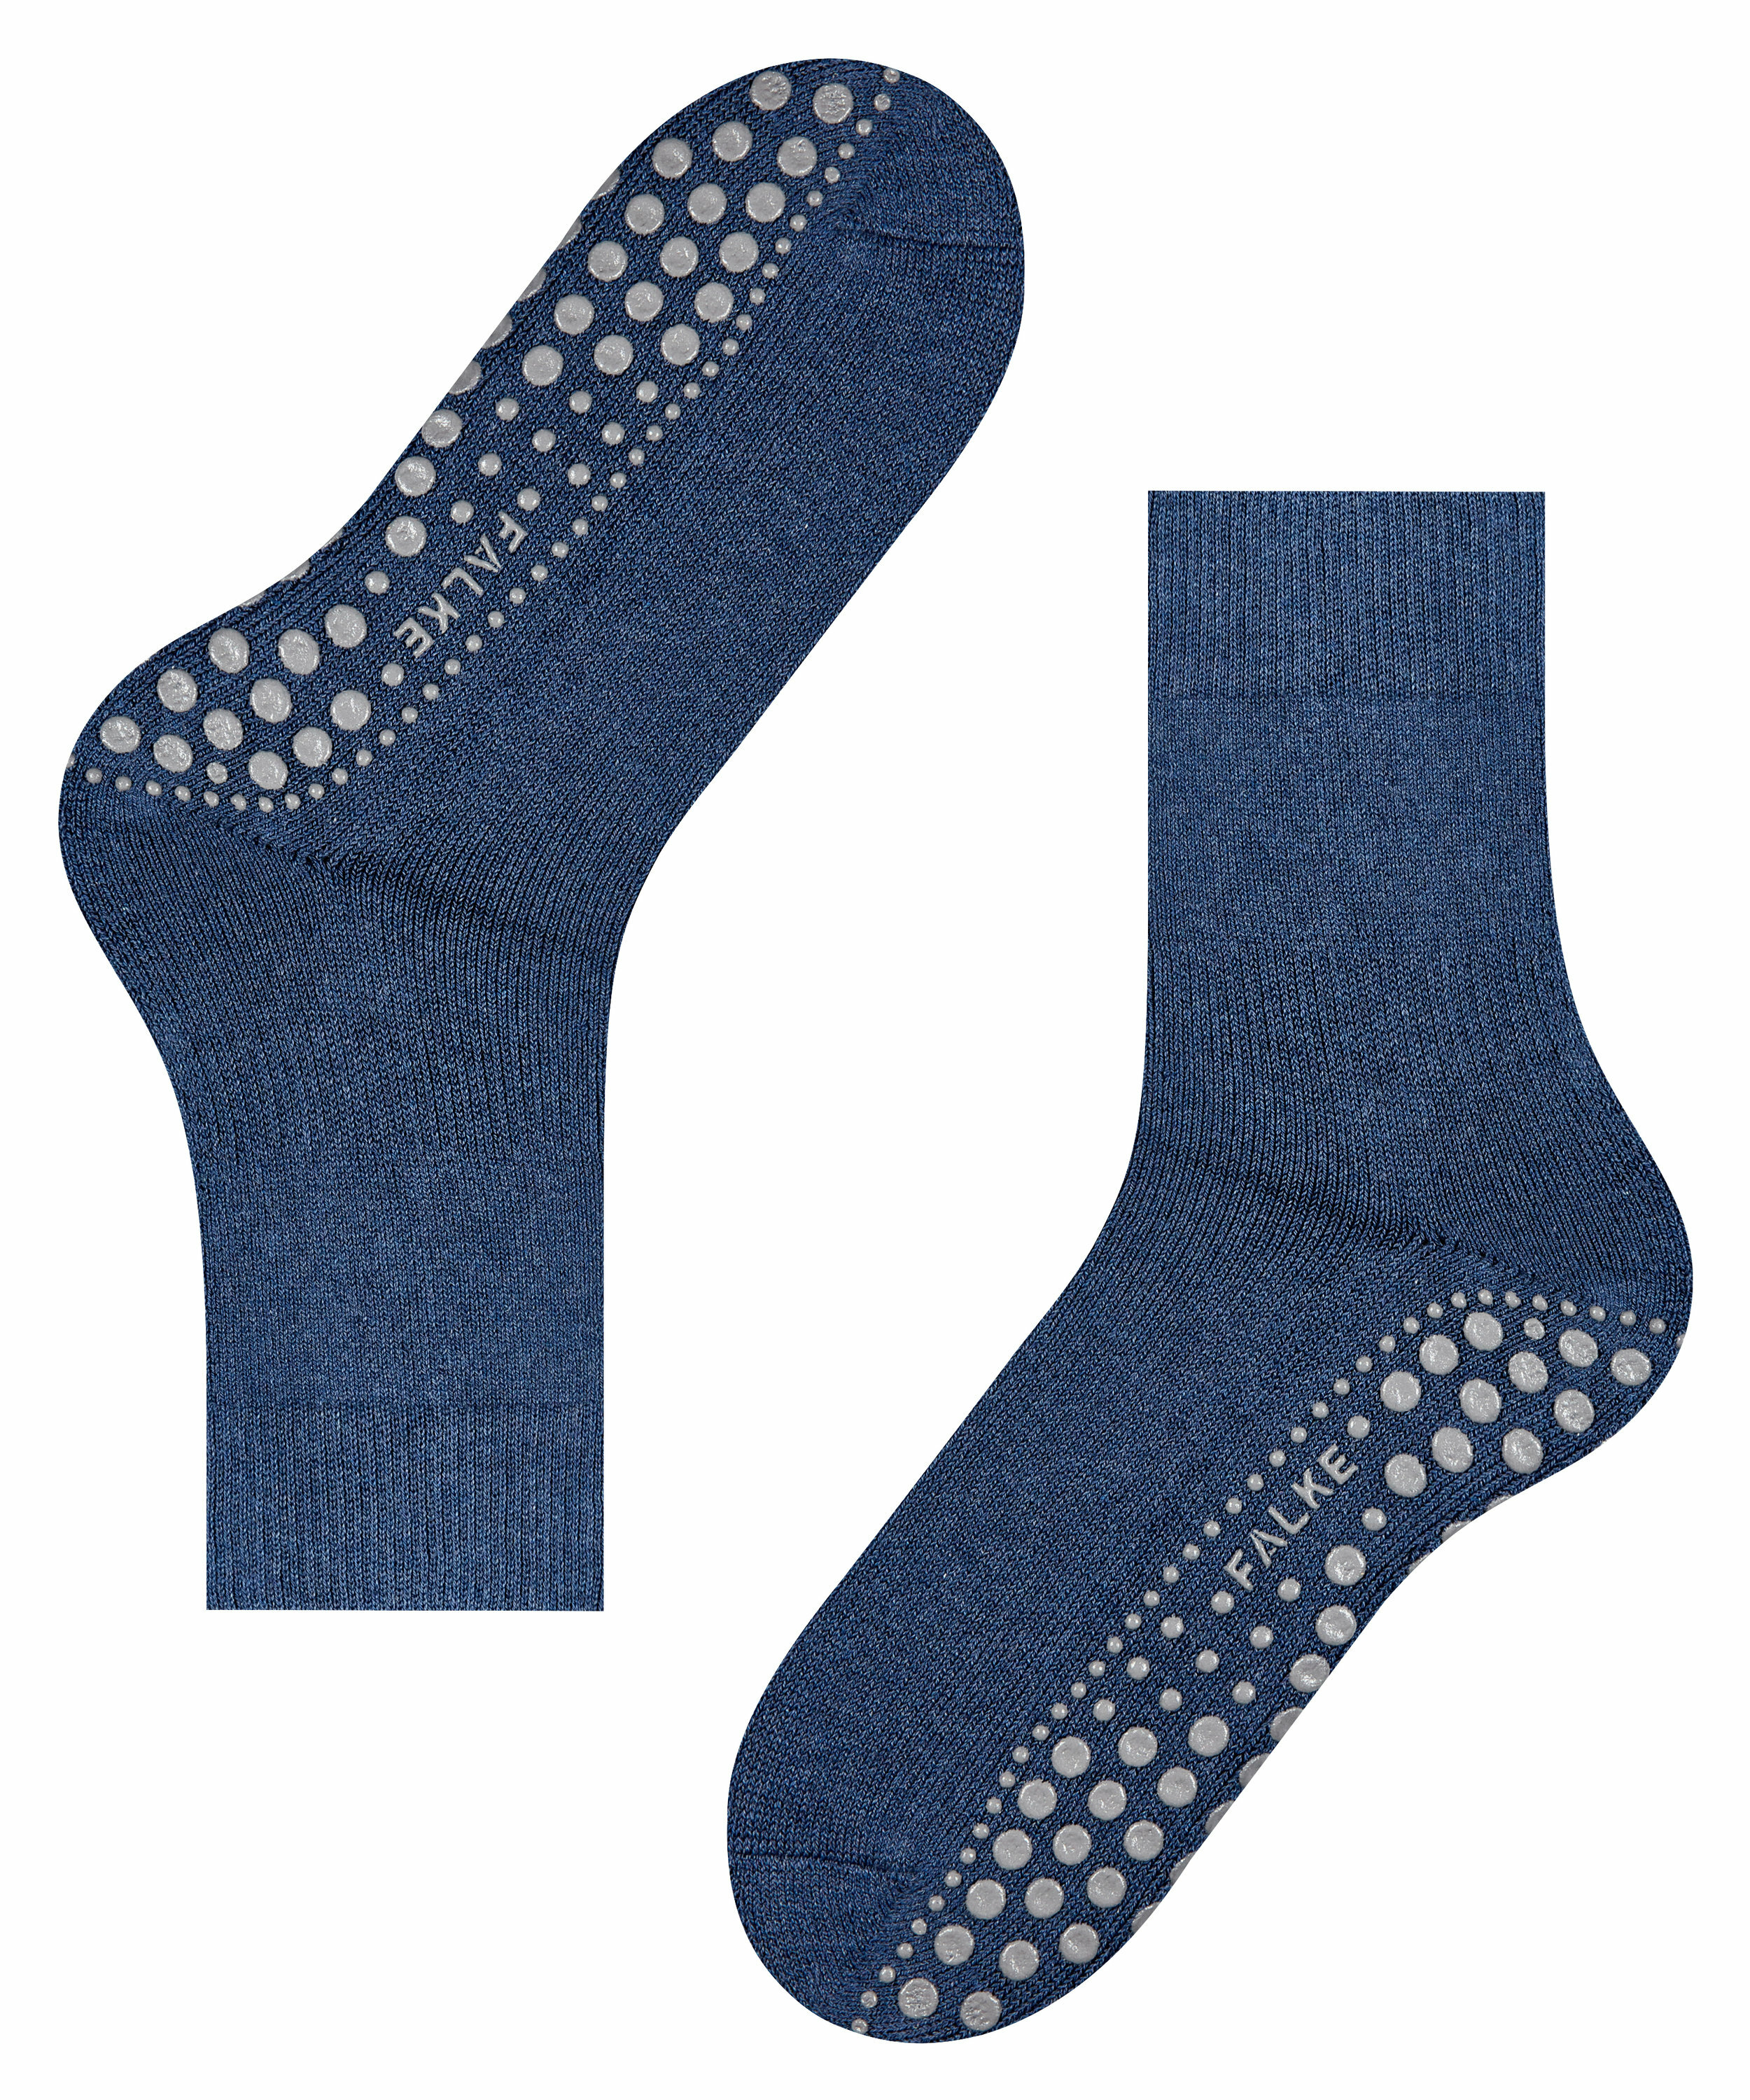 Unisex-ABS-Socke "Homepads" mit Wolle